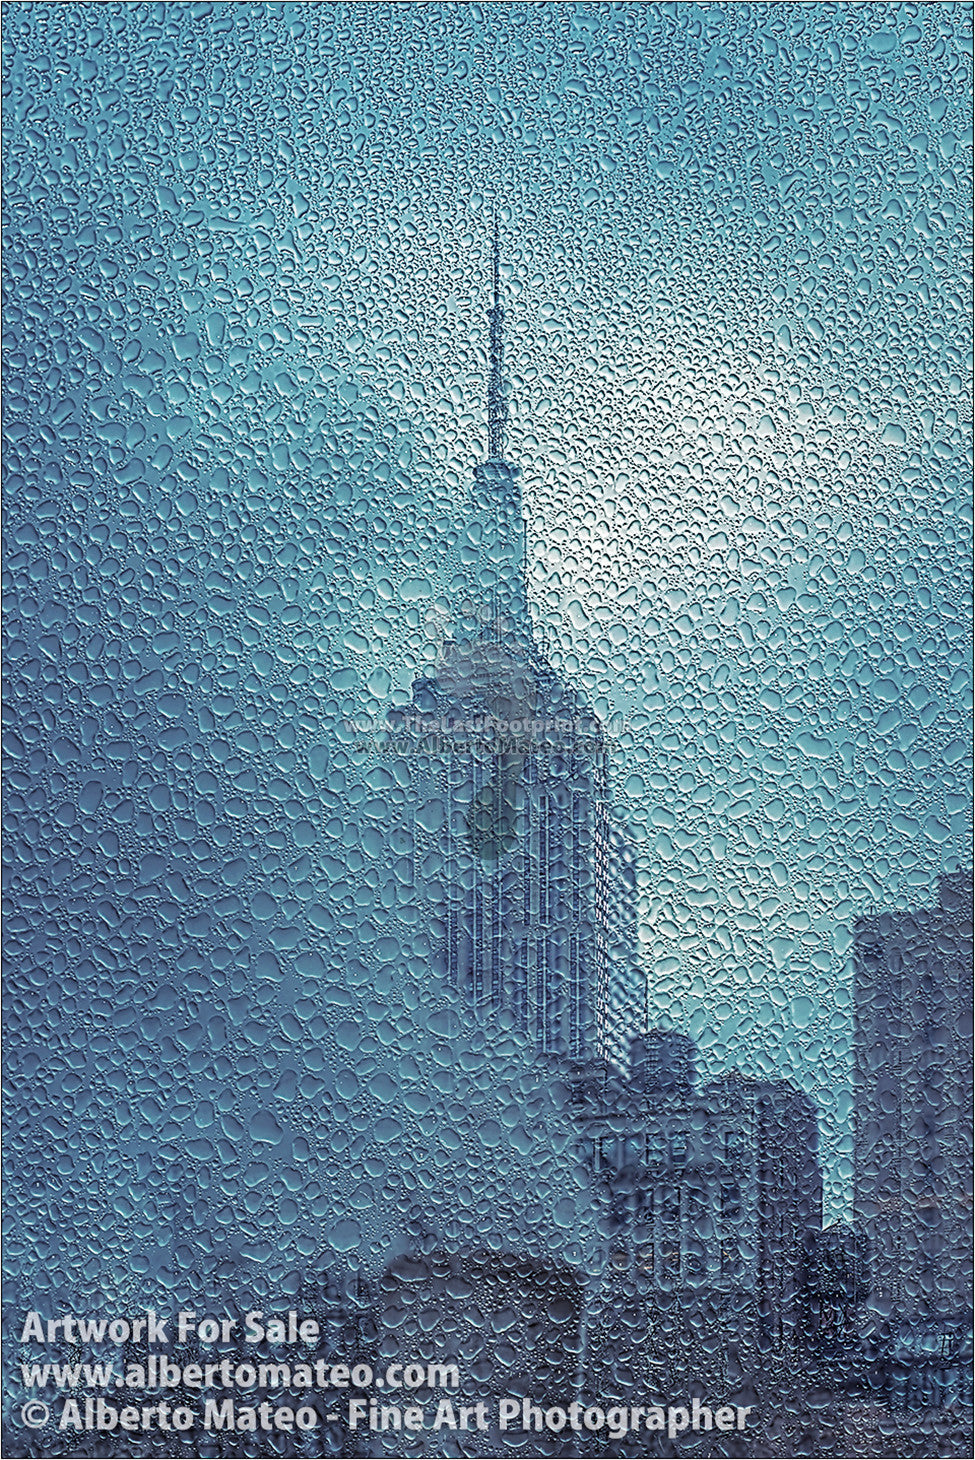 Empire State under the Rain, New York. Series 1/4. | Full view.